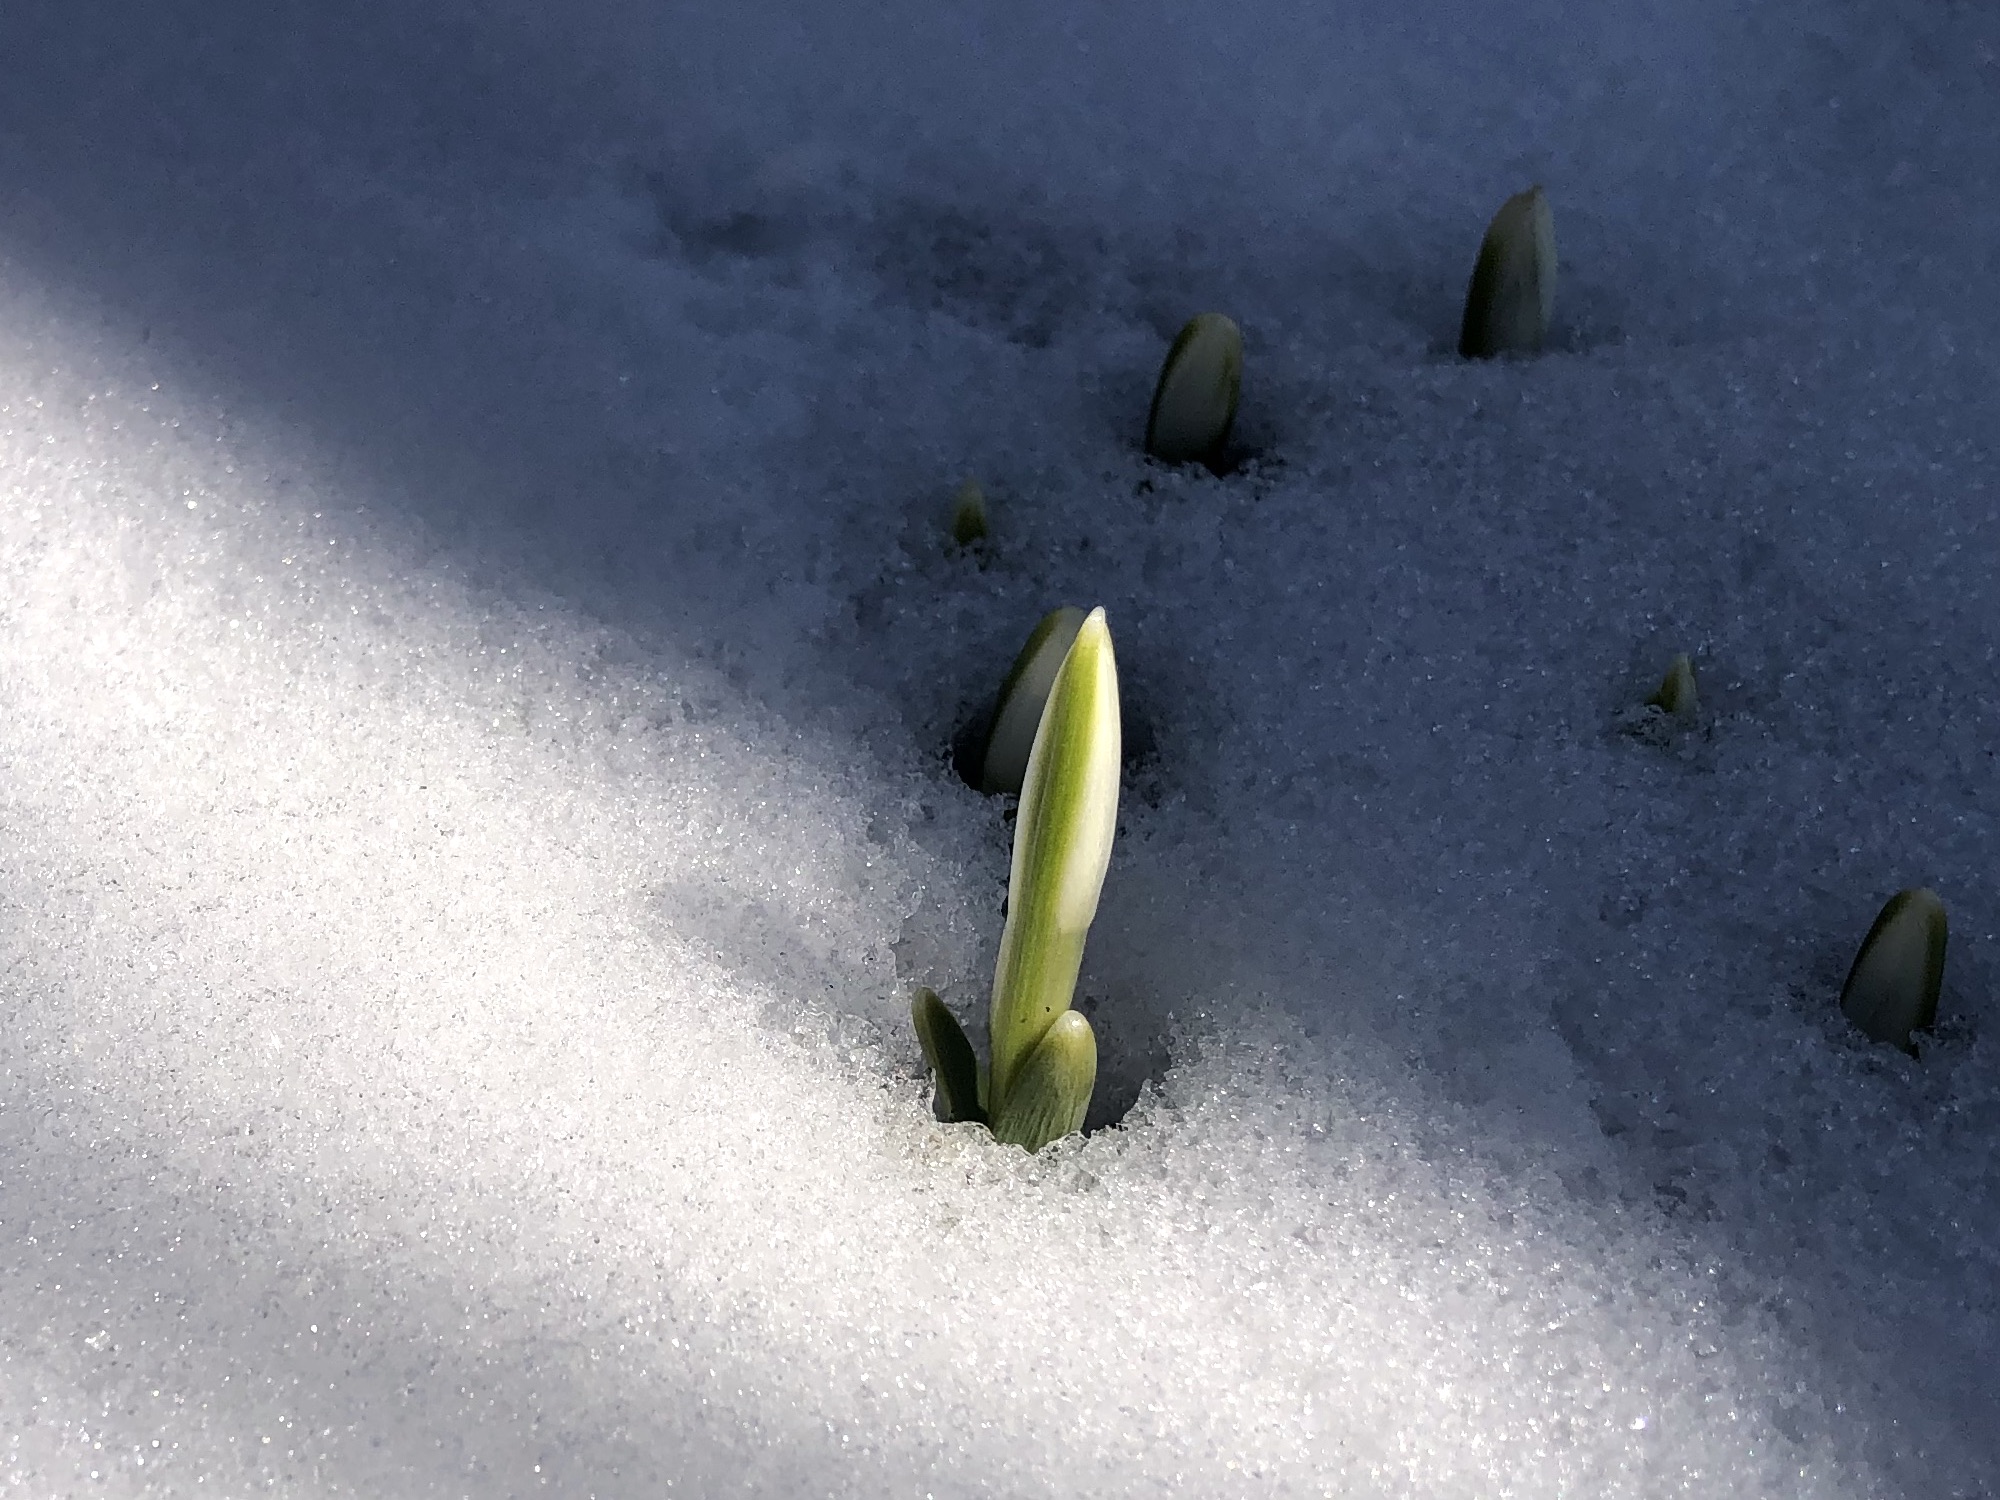 Snowdrops in the University of Wisconsin Arbortetum Longenecker Gardens in Madison Wisconsin on March 9, 2022.